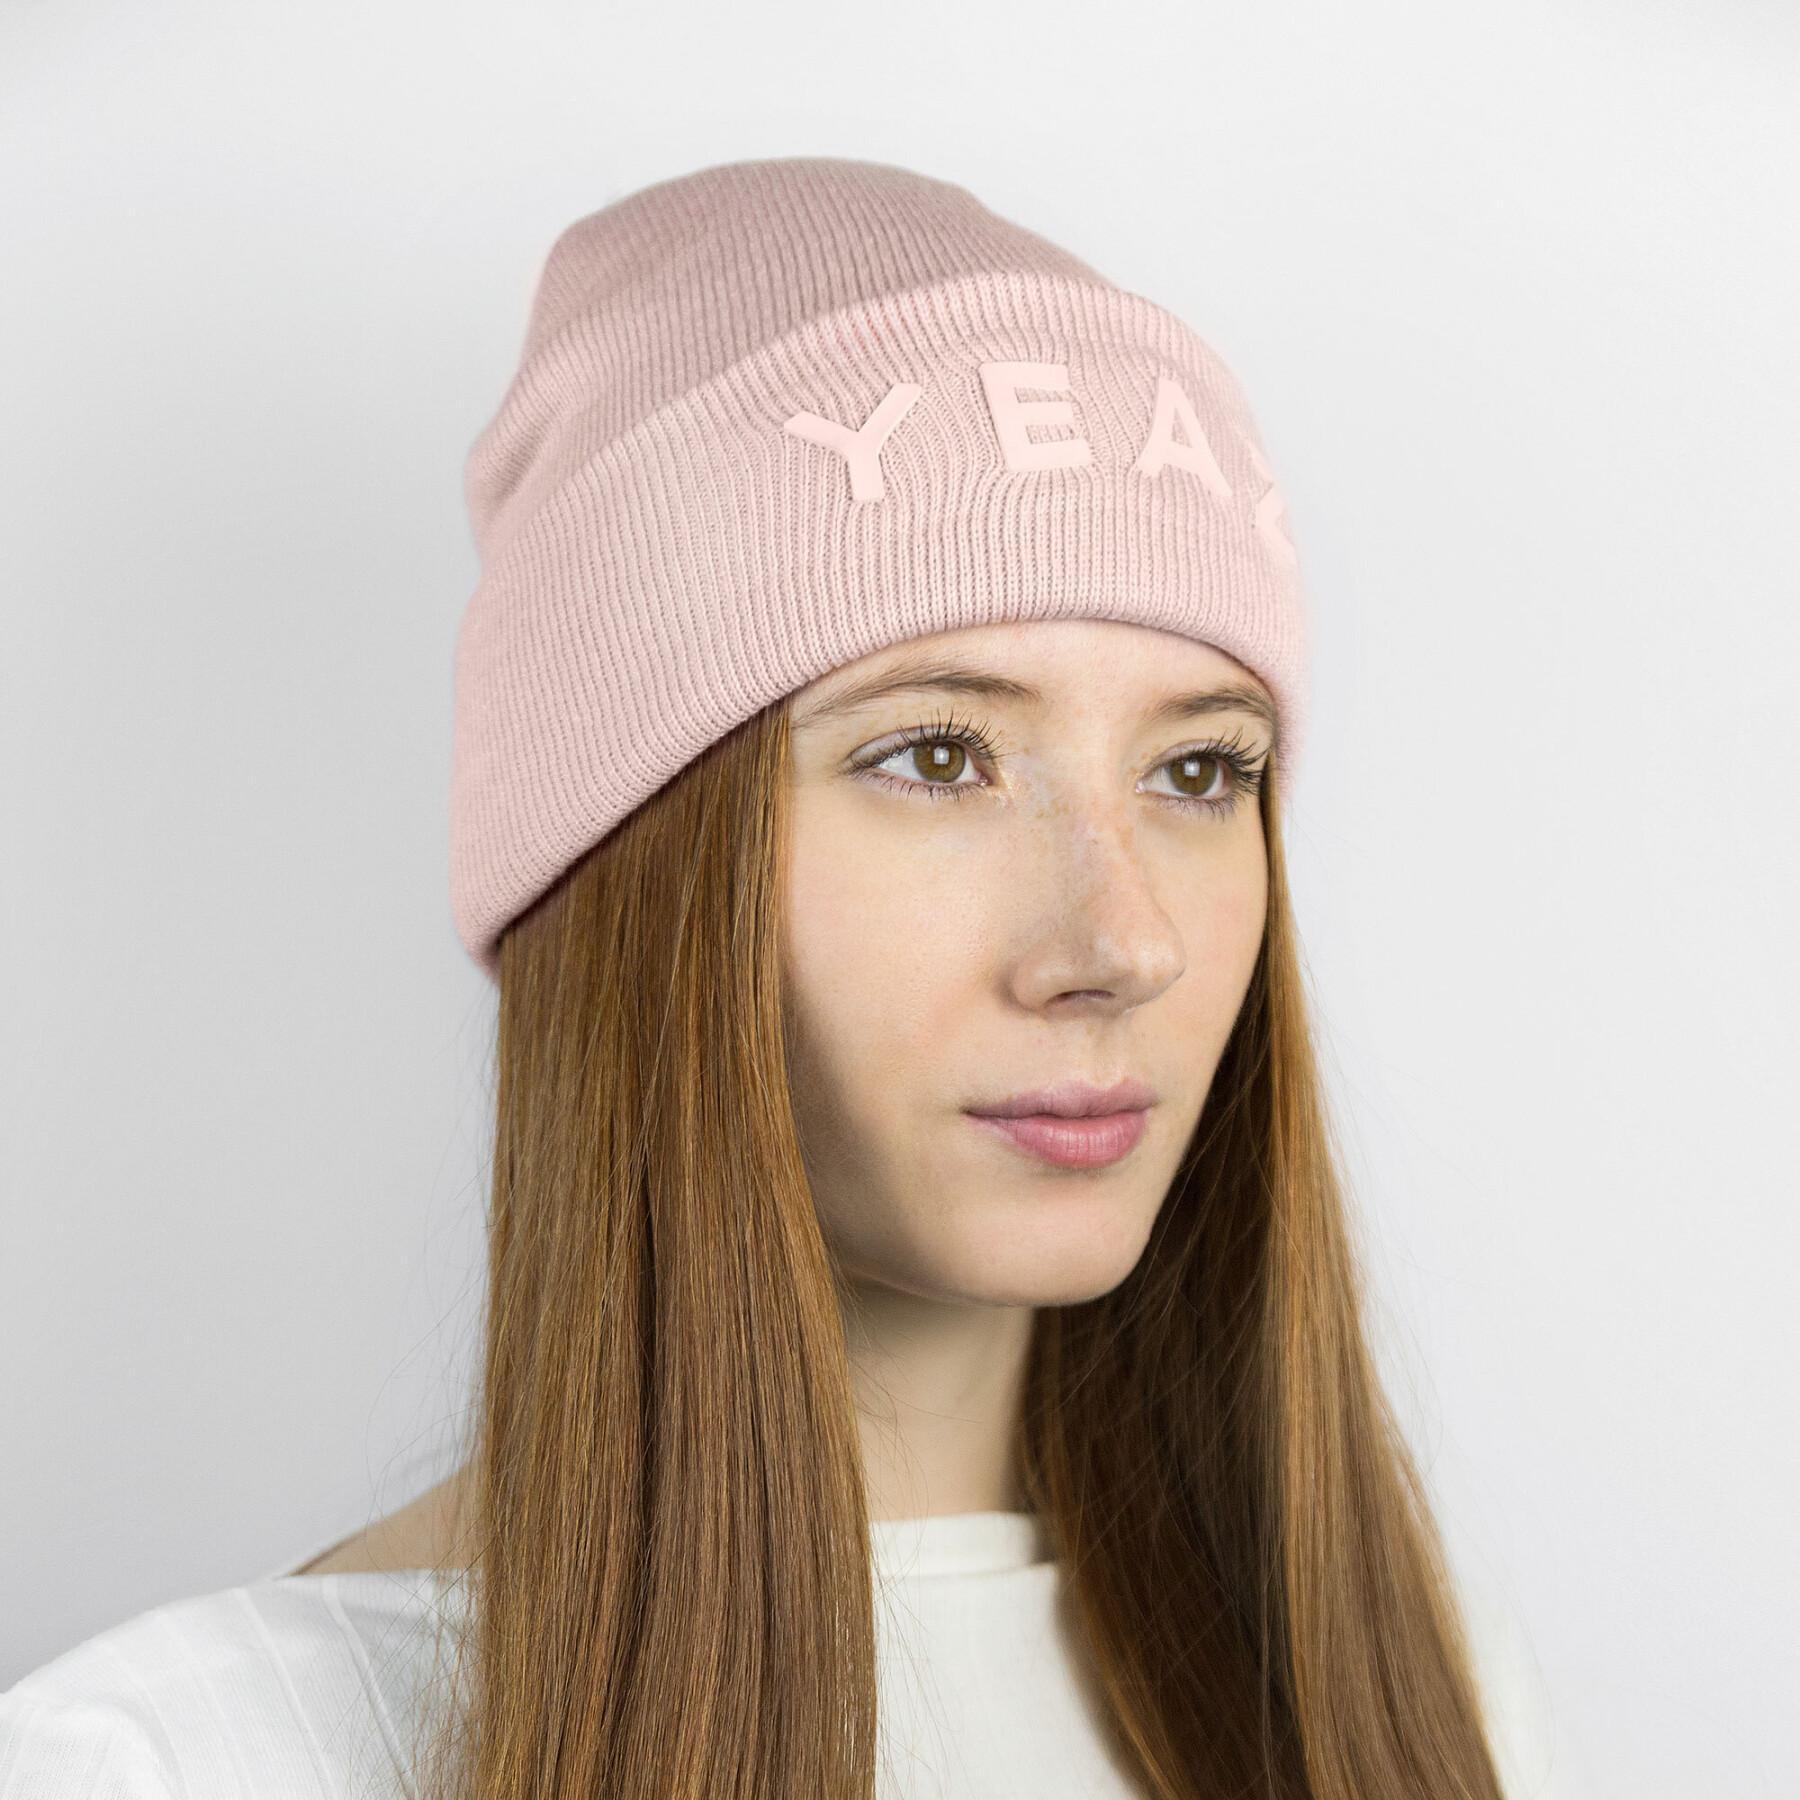 Women's hat Yeaz Wyld